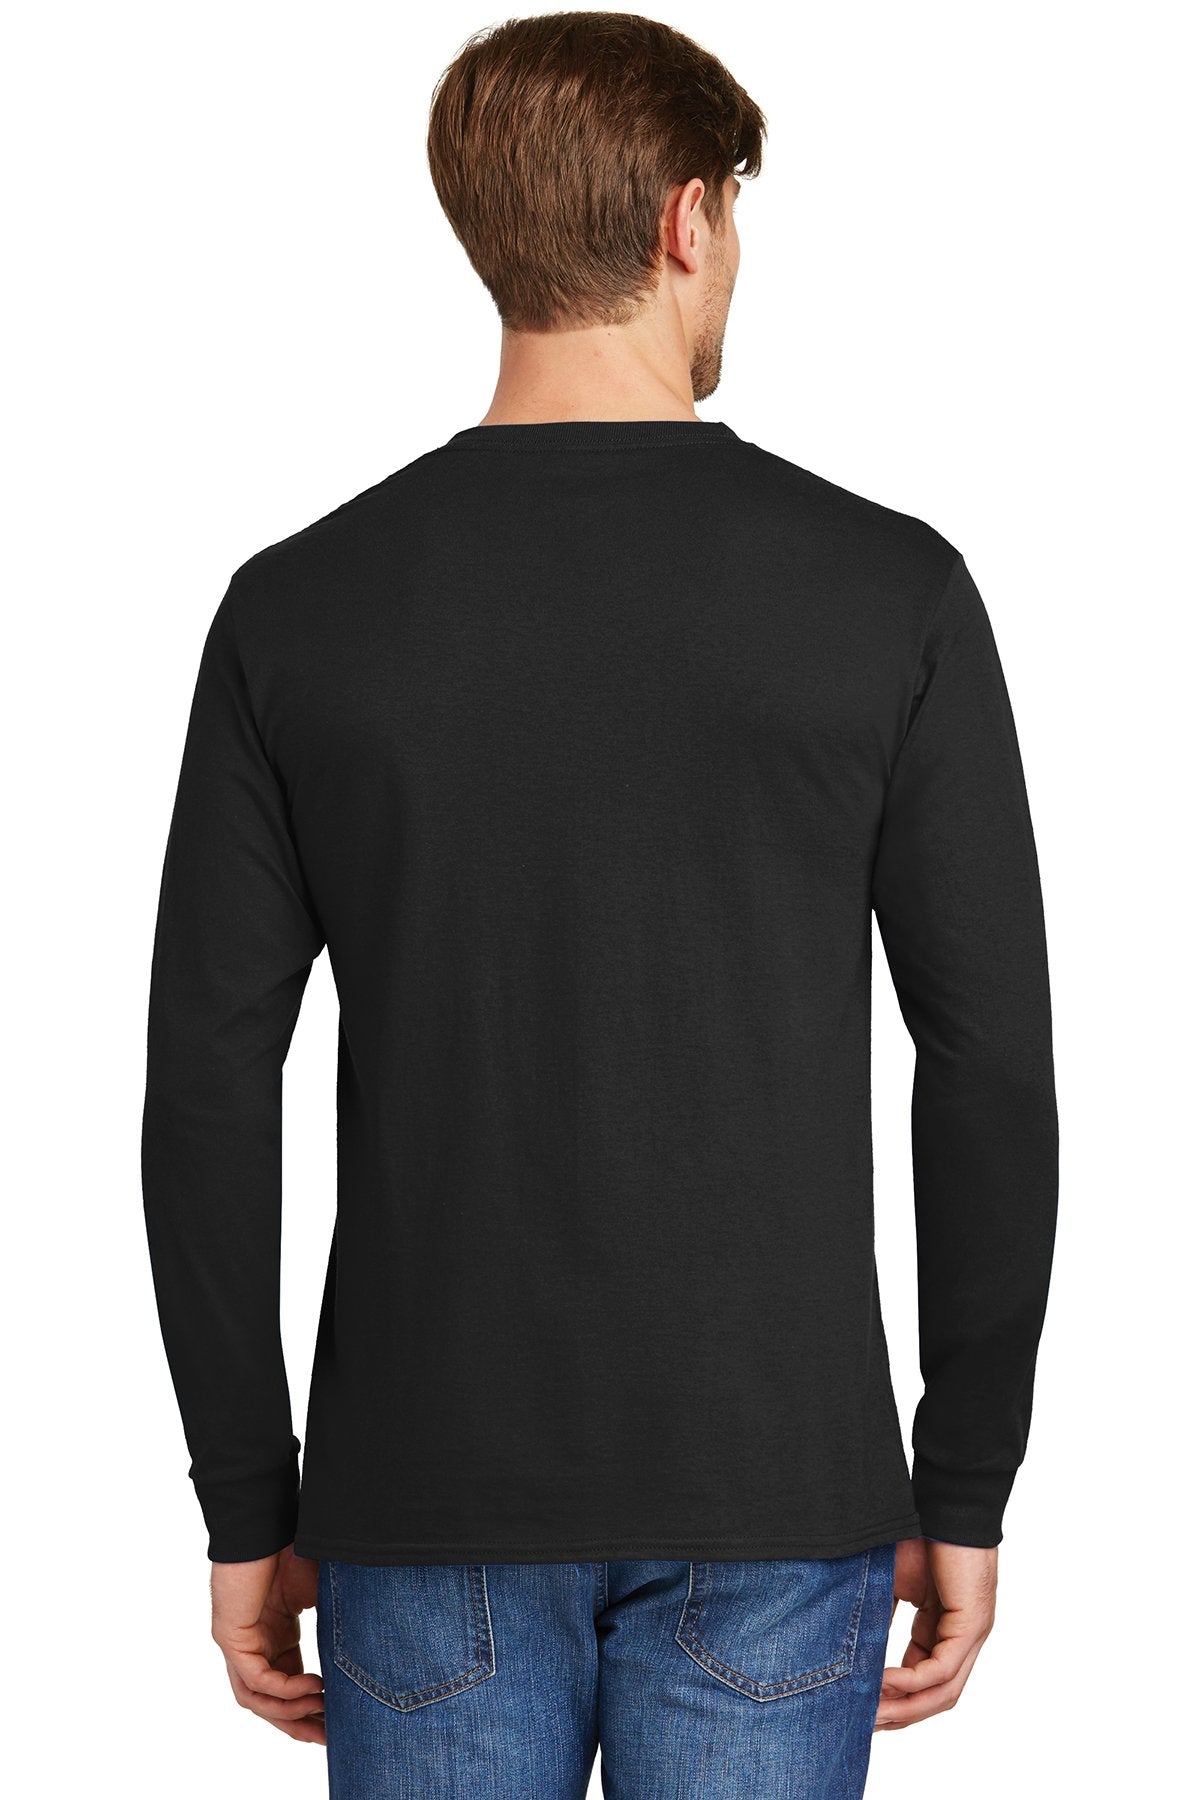 hanes tagless cotton long sleeve t shirt 5586 black